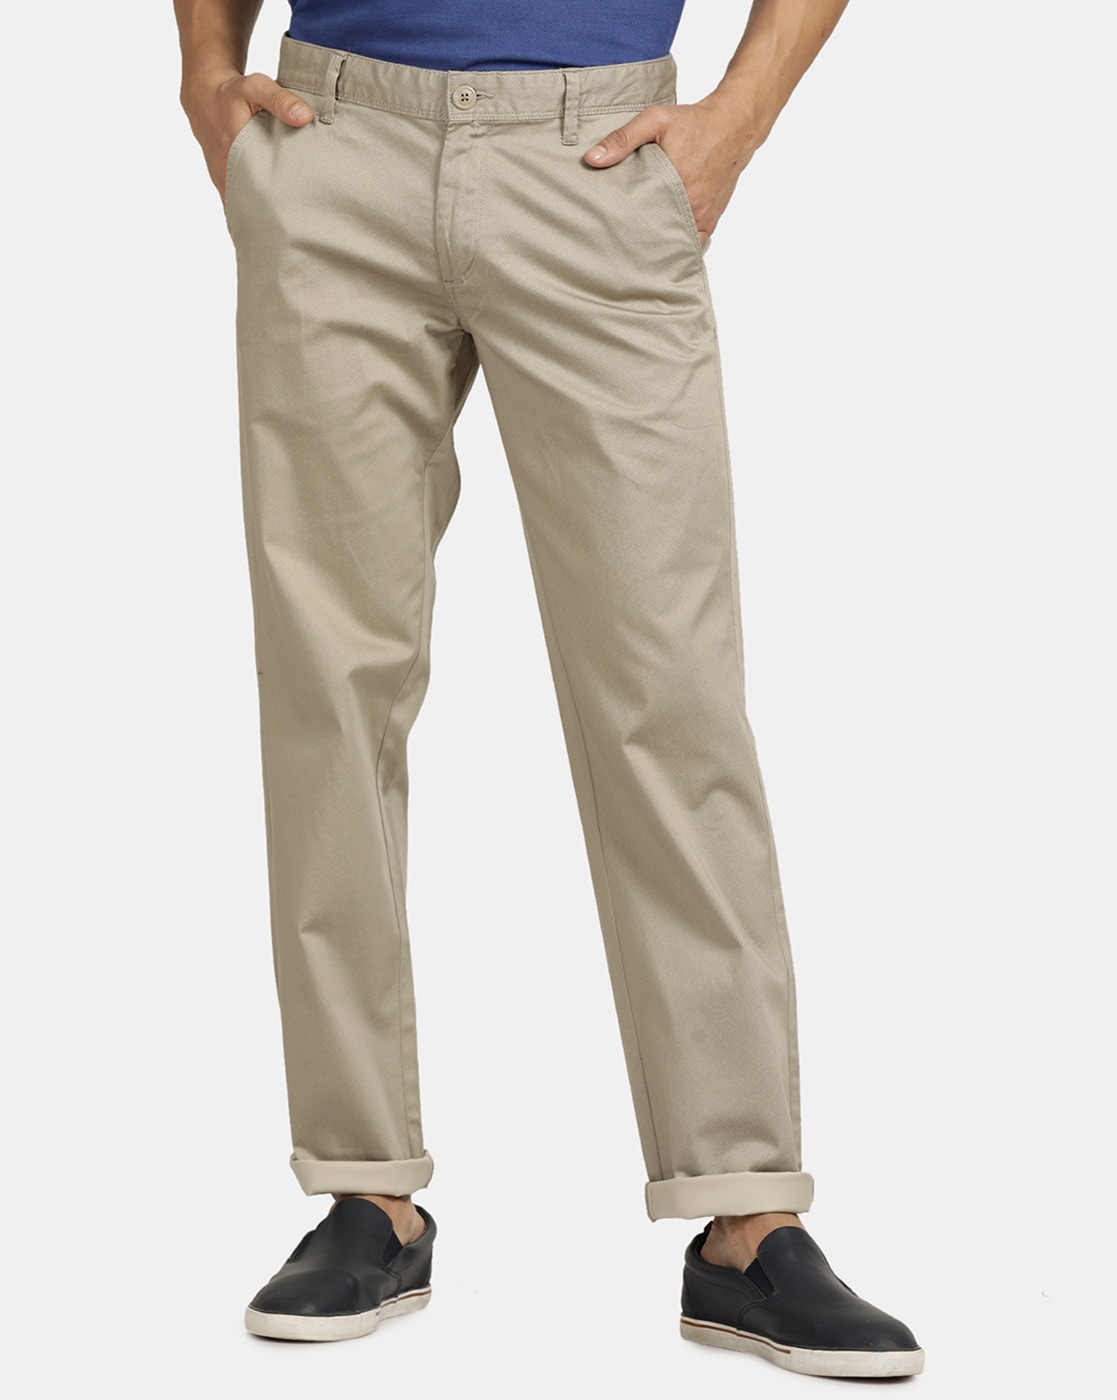 Buy Dockers Mens Classic Fit Easy Khaki Pants  Pleated Timberwolf 33W x  32L at Amazonin